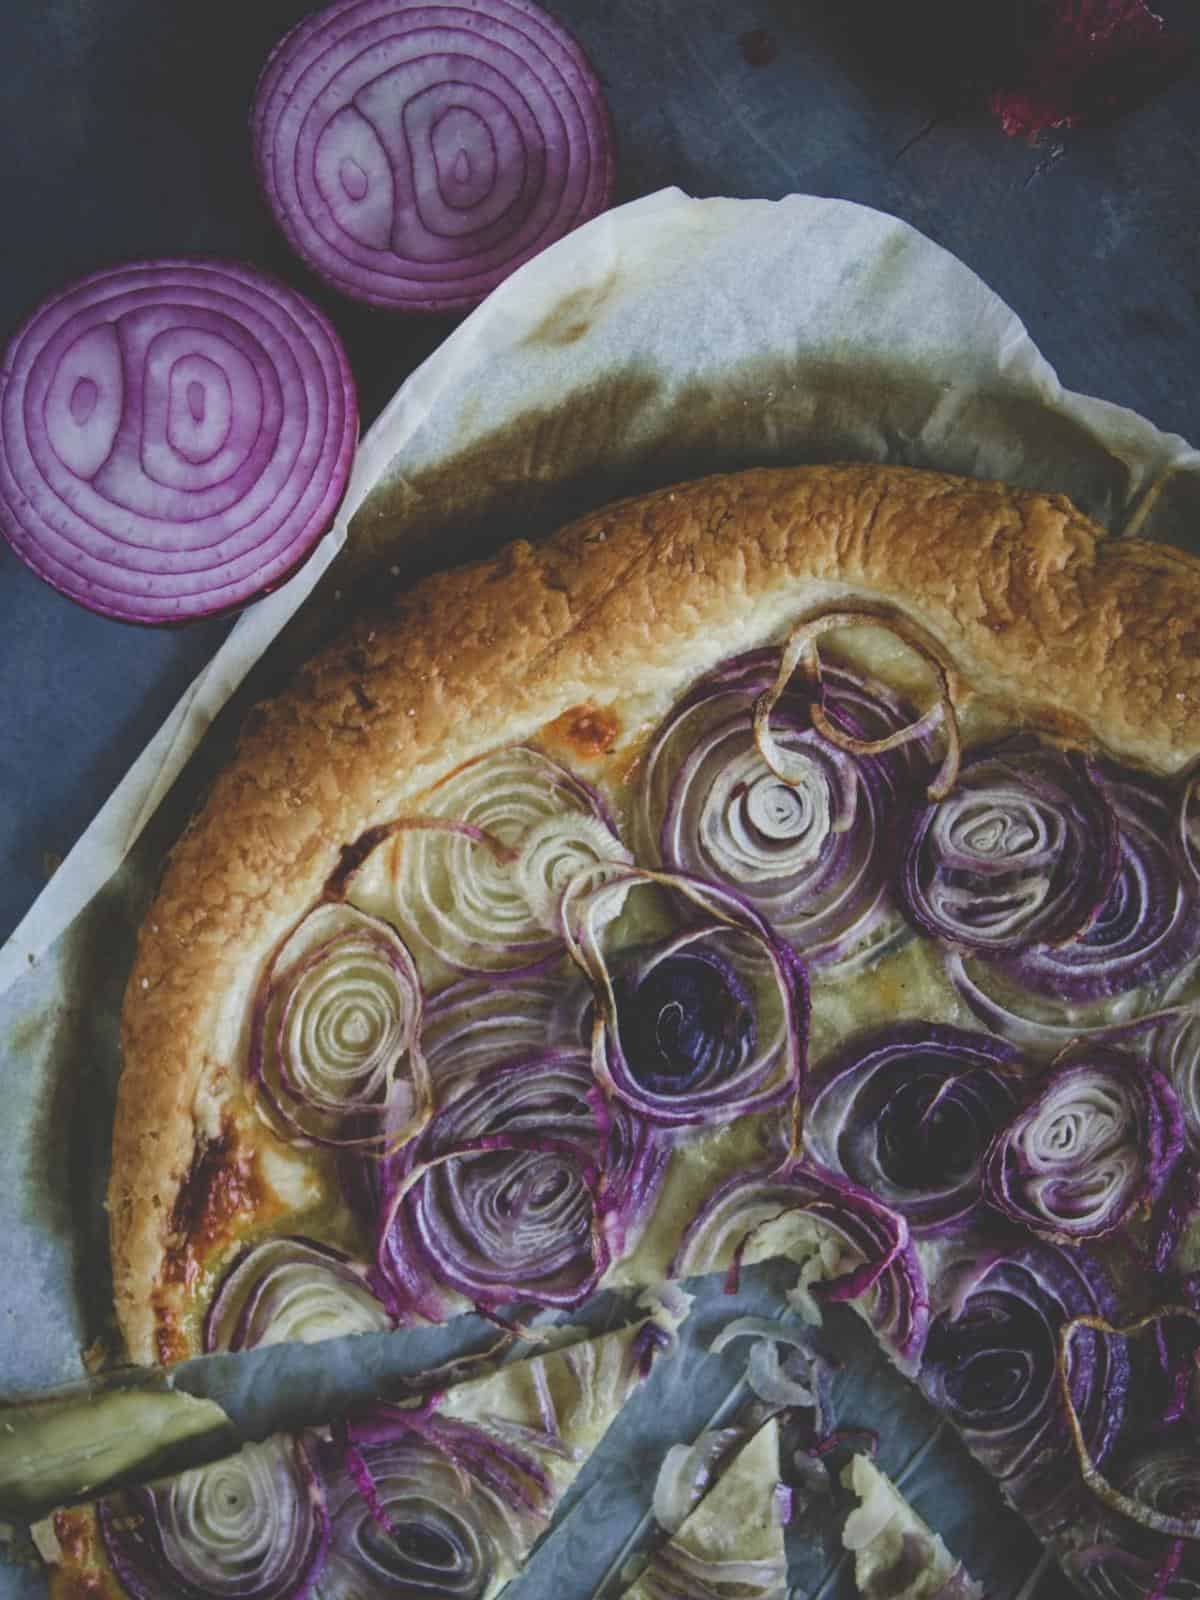 onion tart- sliced onionon side